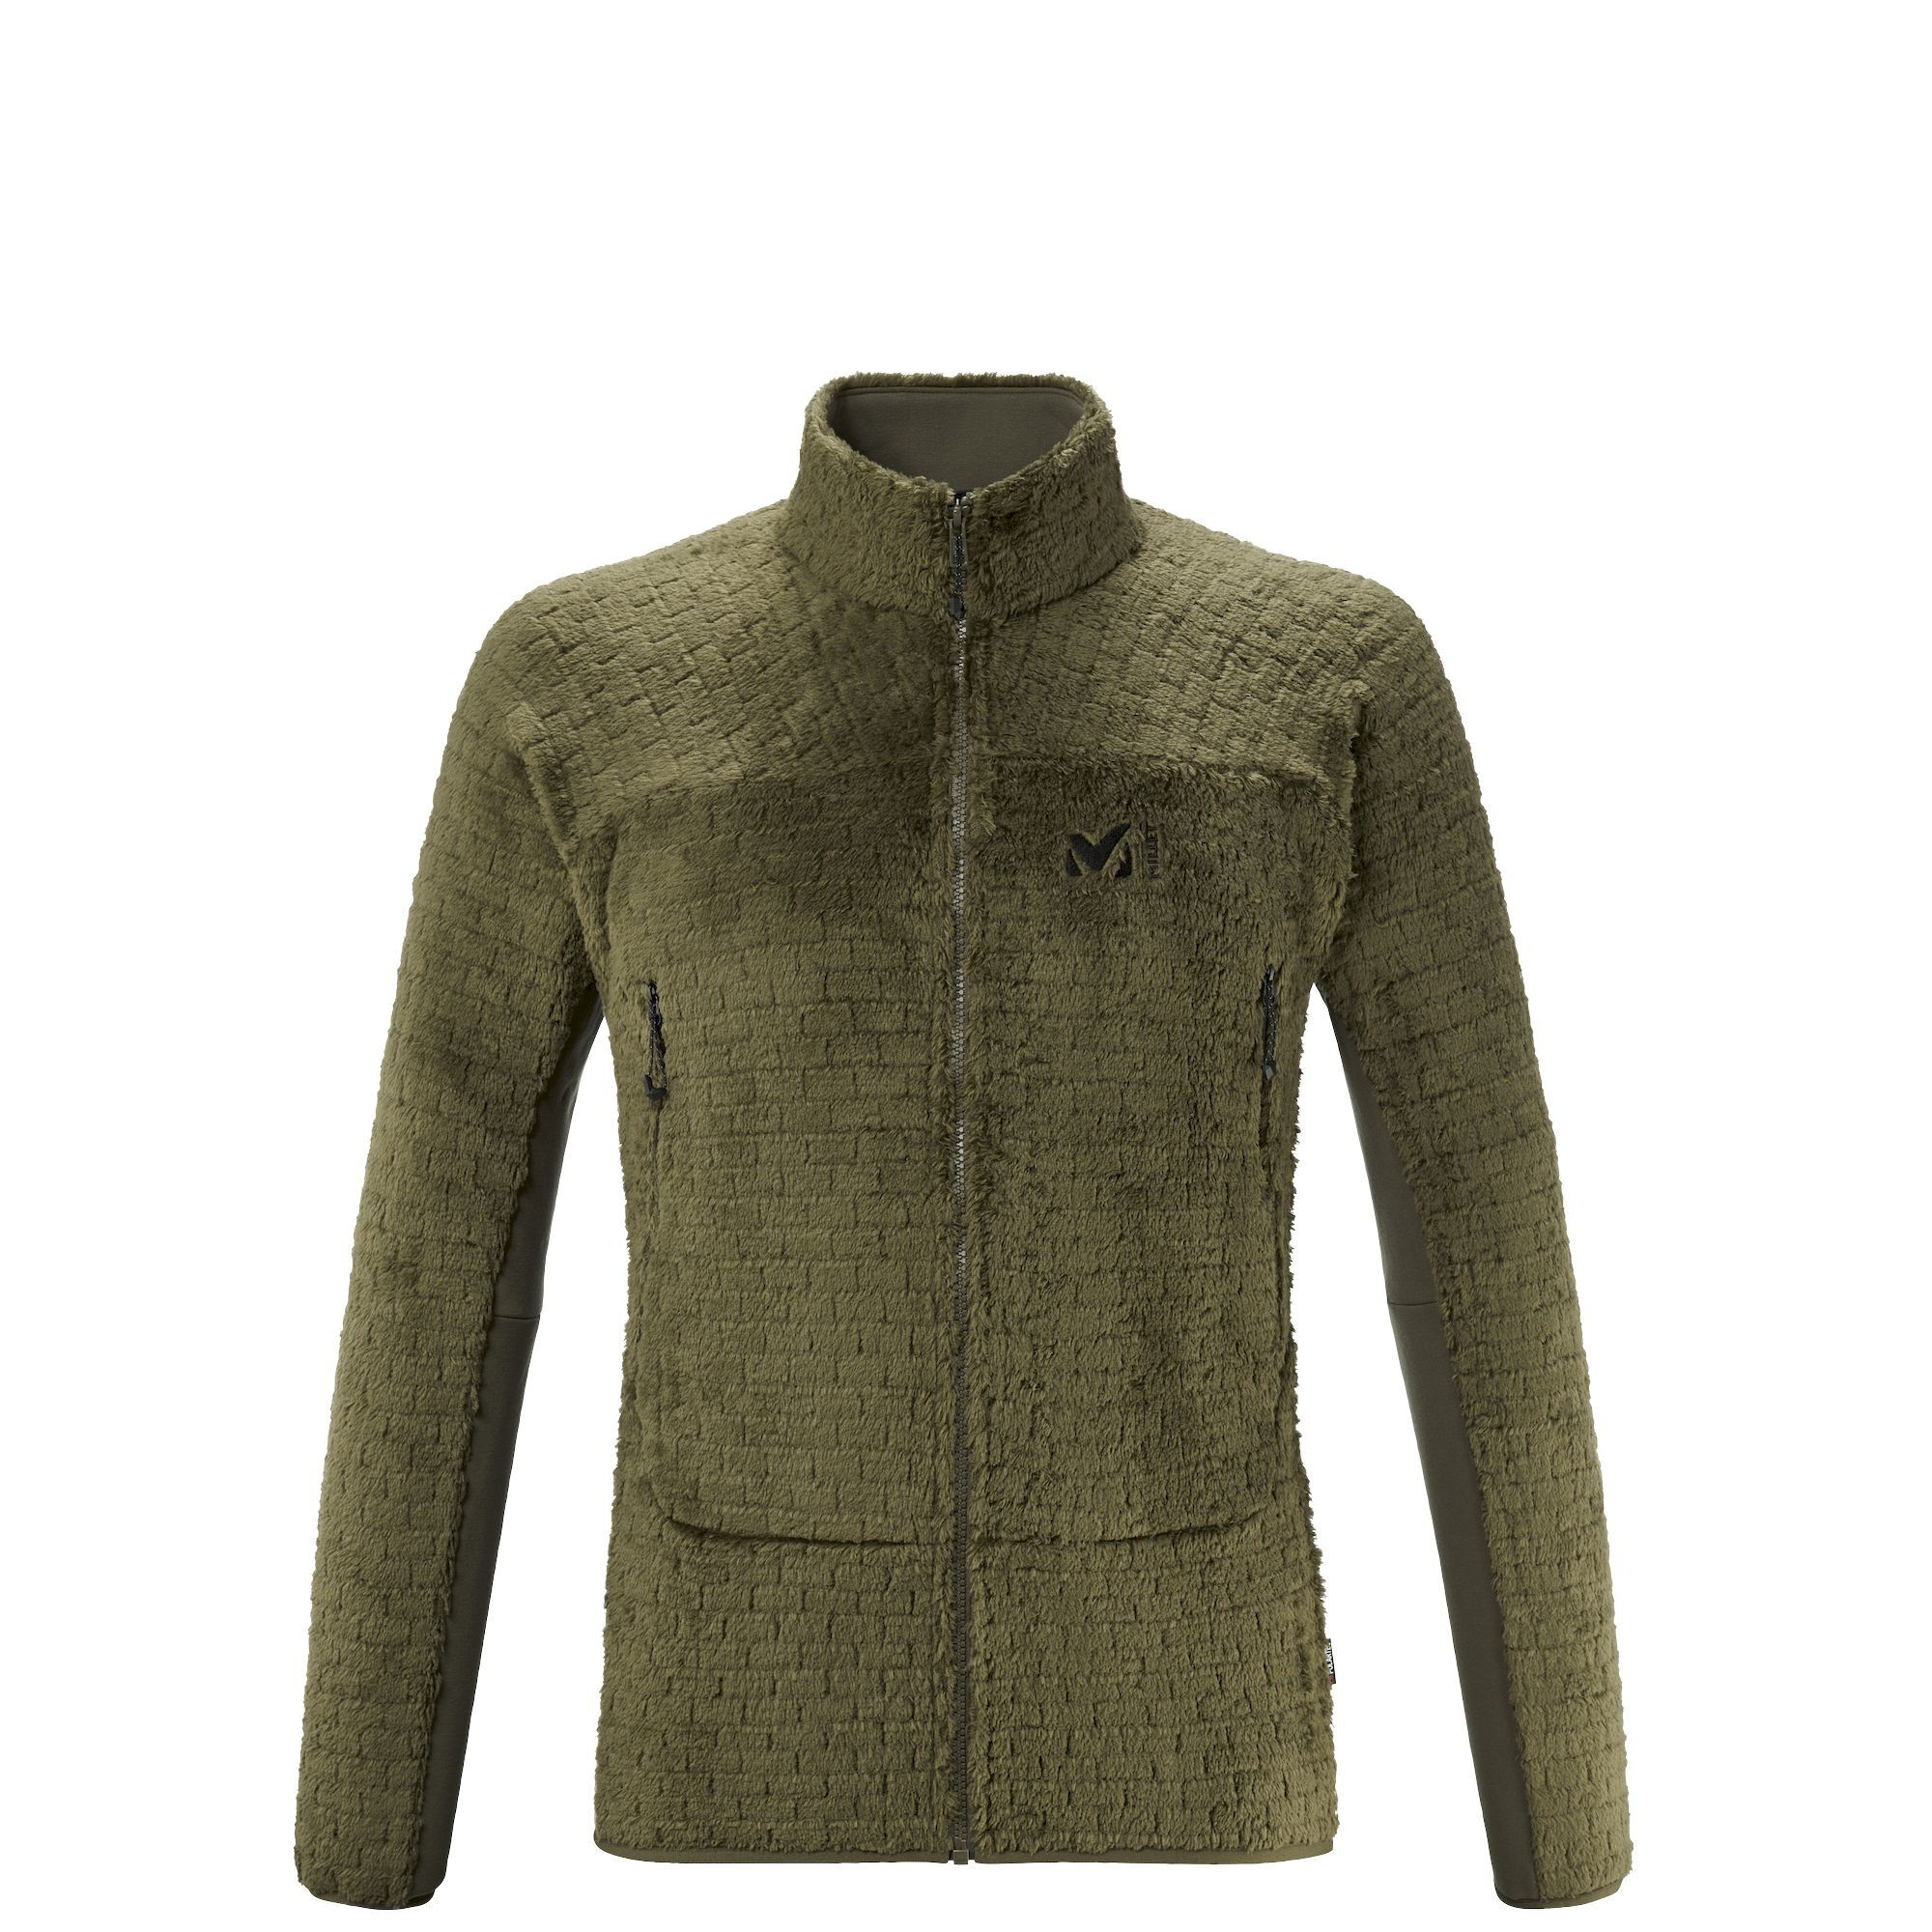 Millet Fusion Lines Loft Jacket - Fleece jacket - Men's